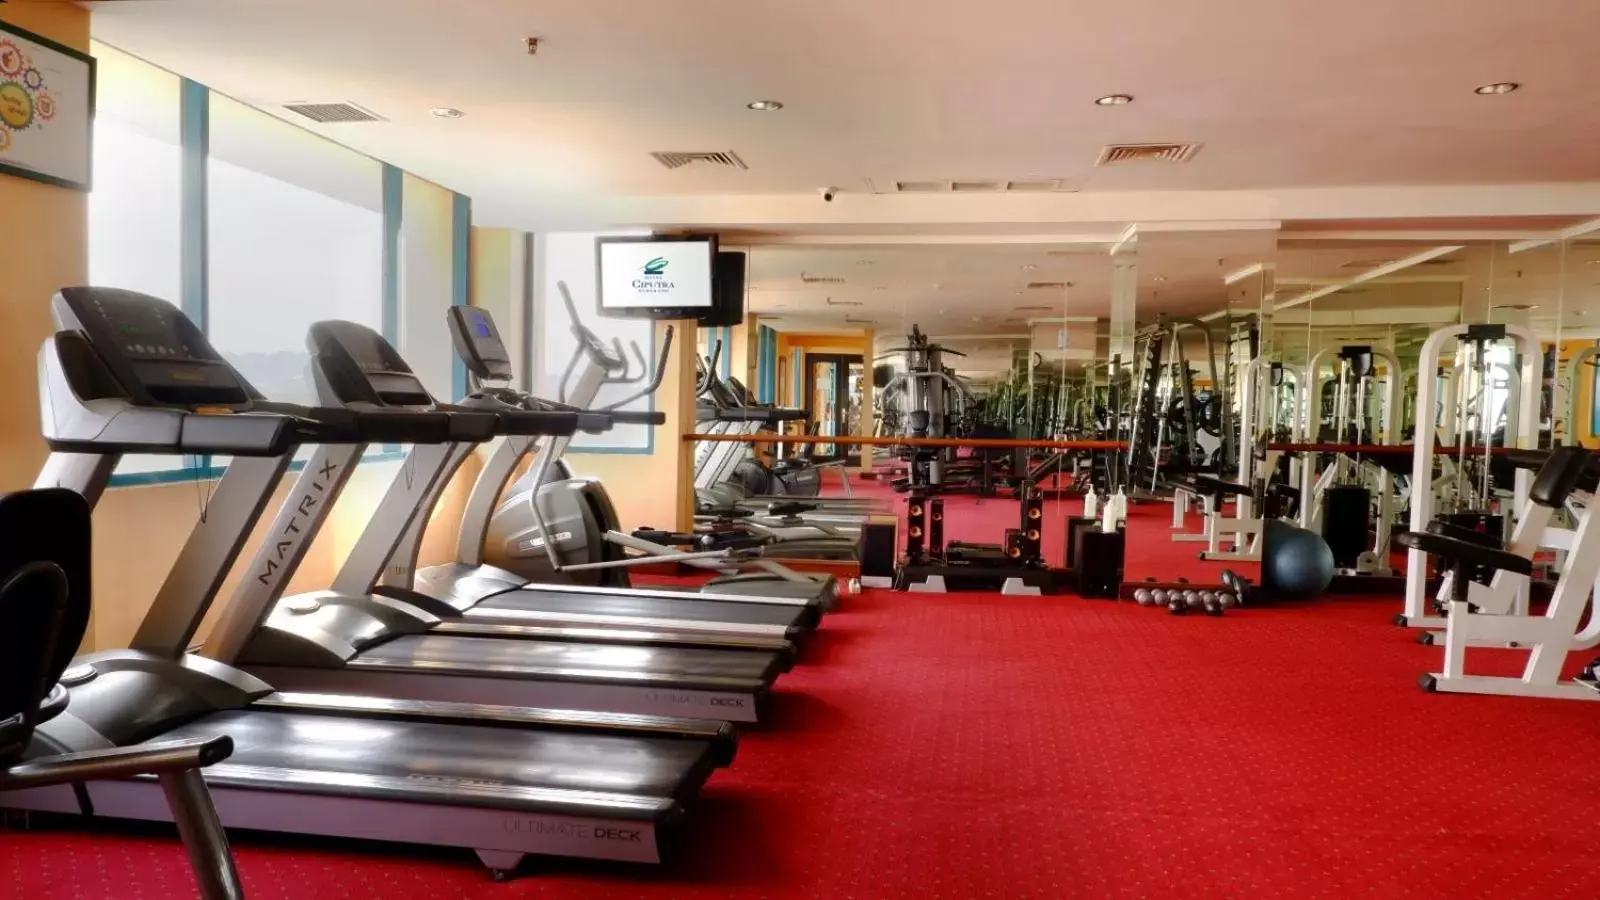 Fitness centre/facilities, Fitness Center/Facilities in Hotel Ciputra Semarang managed by Swiss-Belhotel International